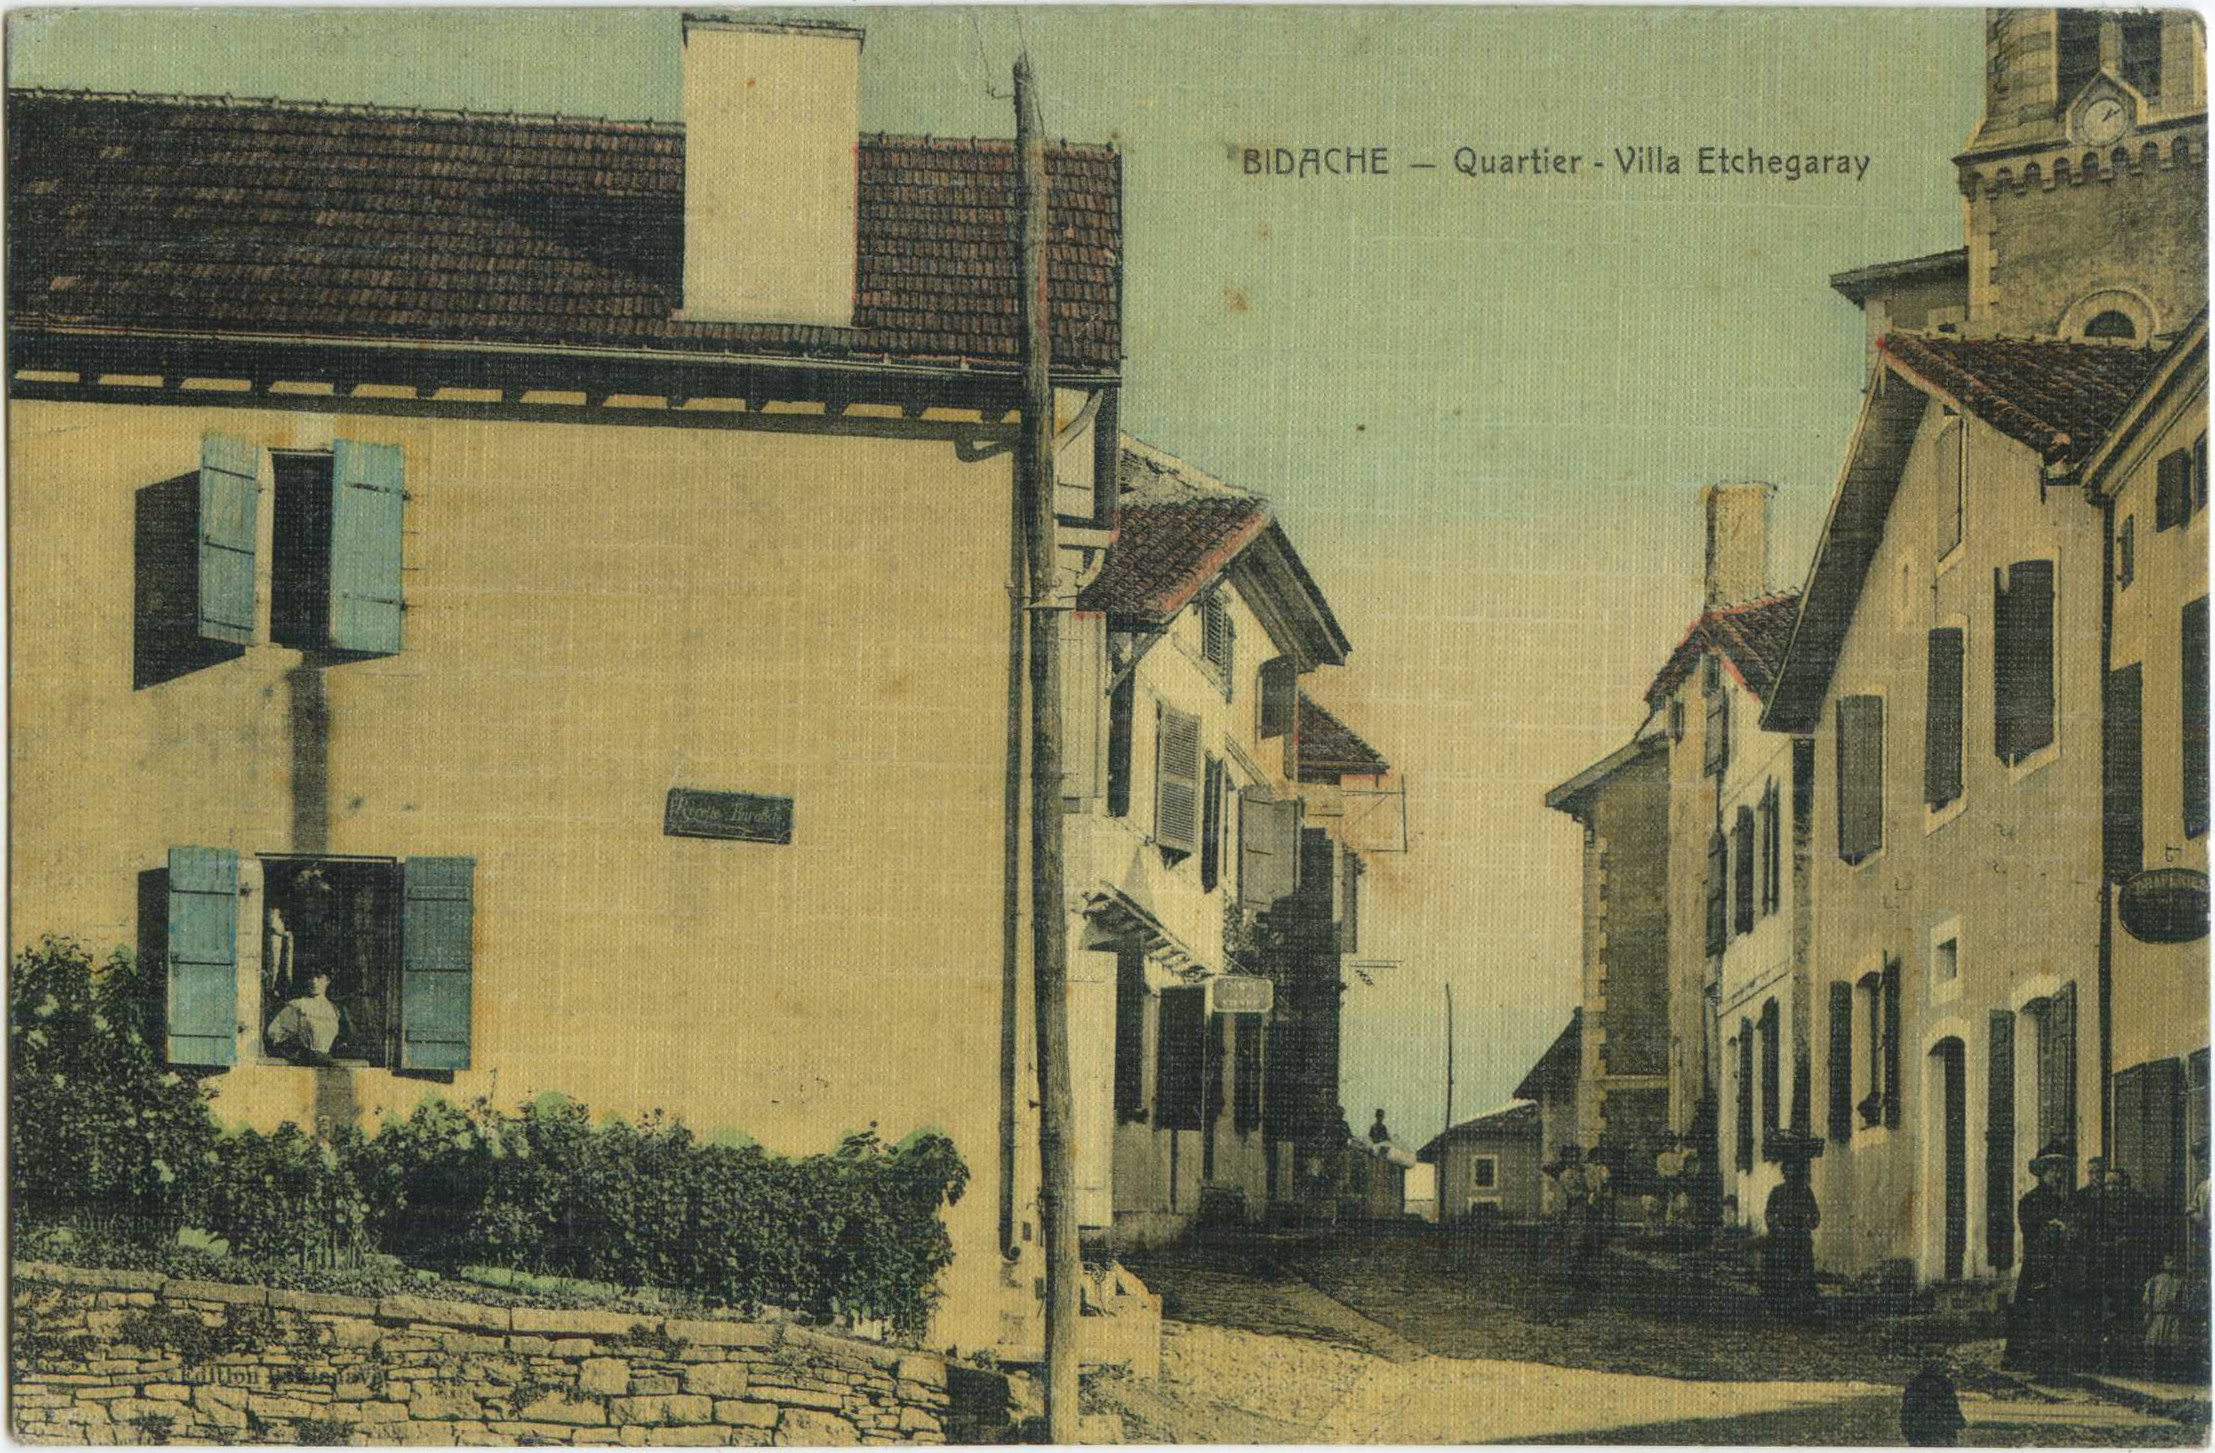 Bidache - Quartier - Villa Etchegaray